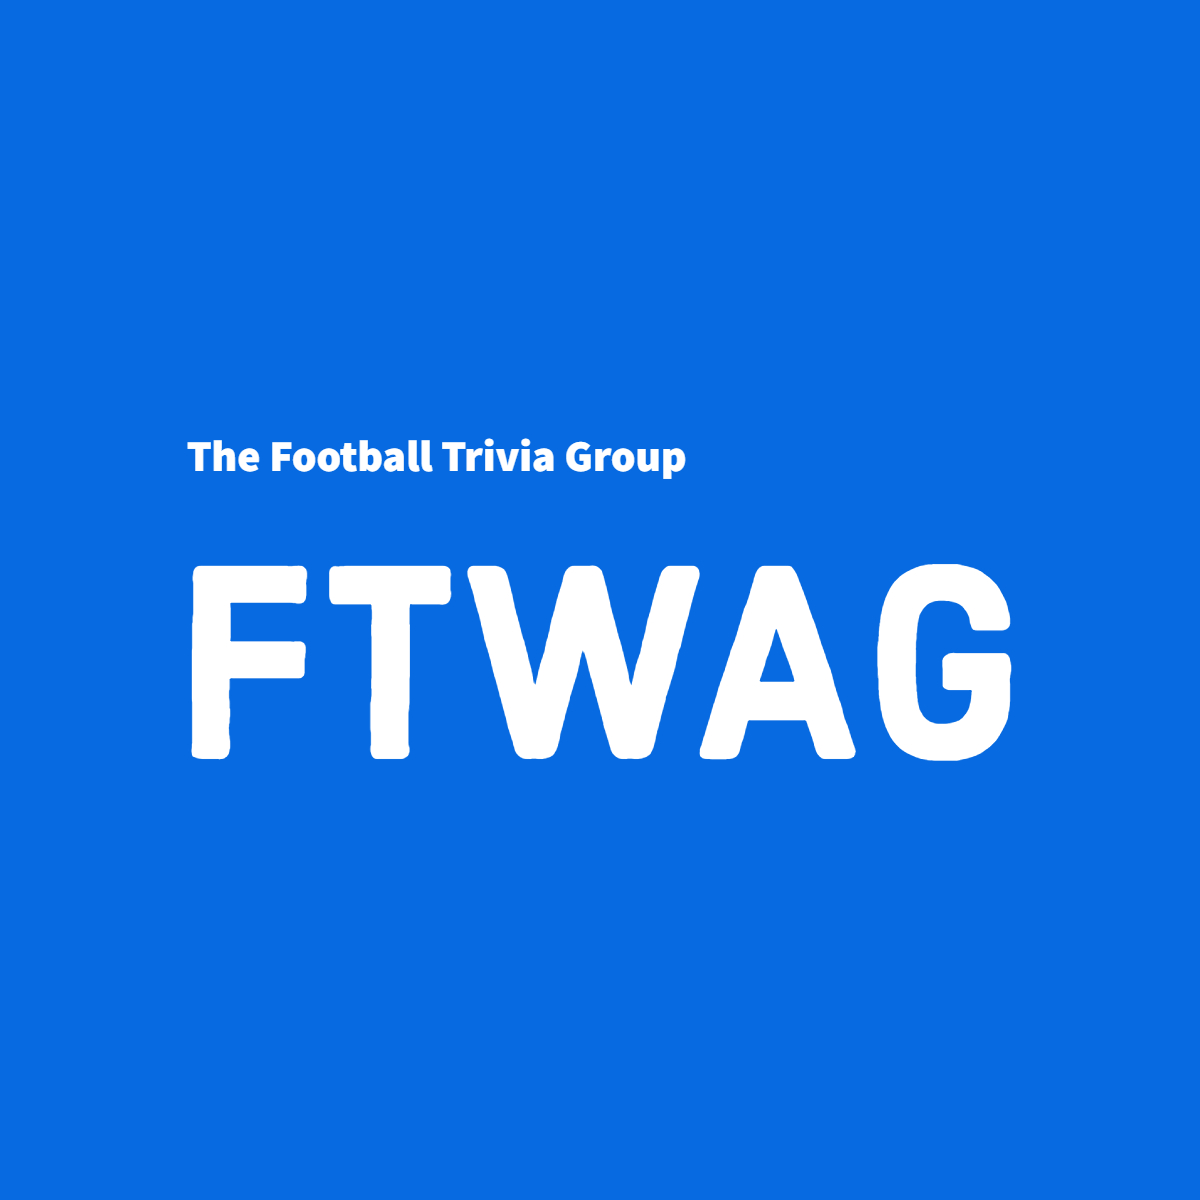 FTWAG - the Football Trivia Group